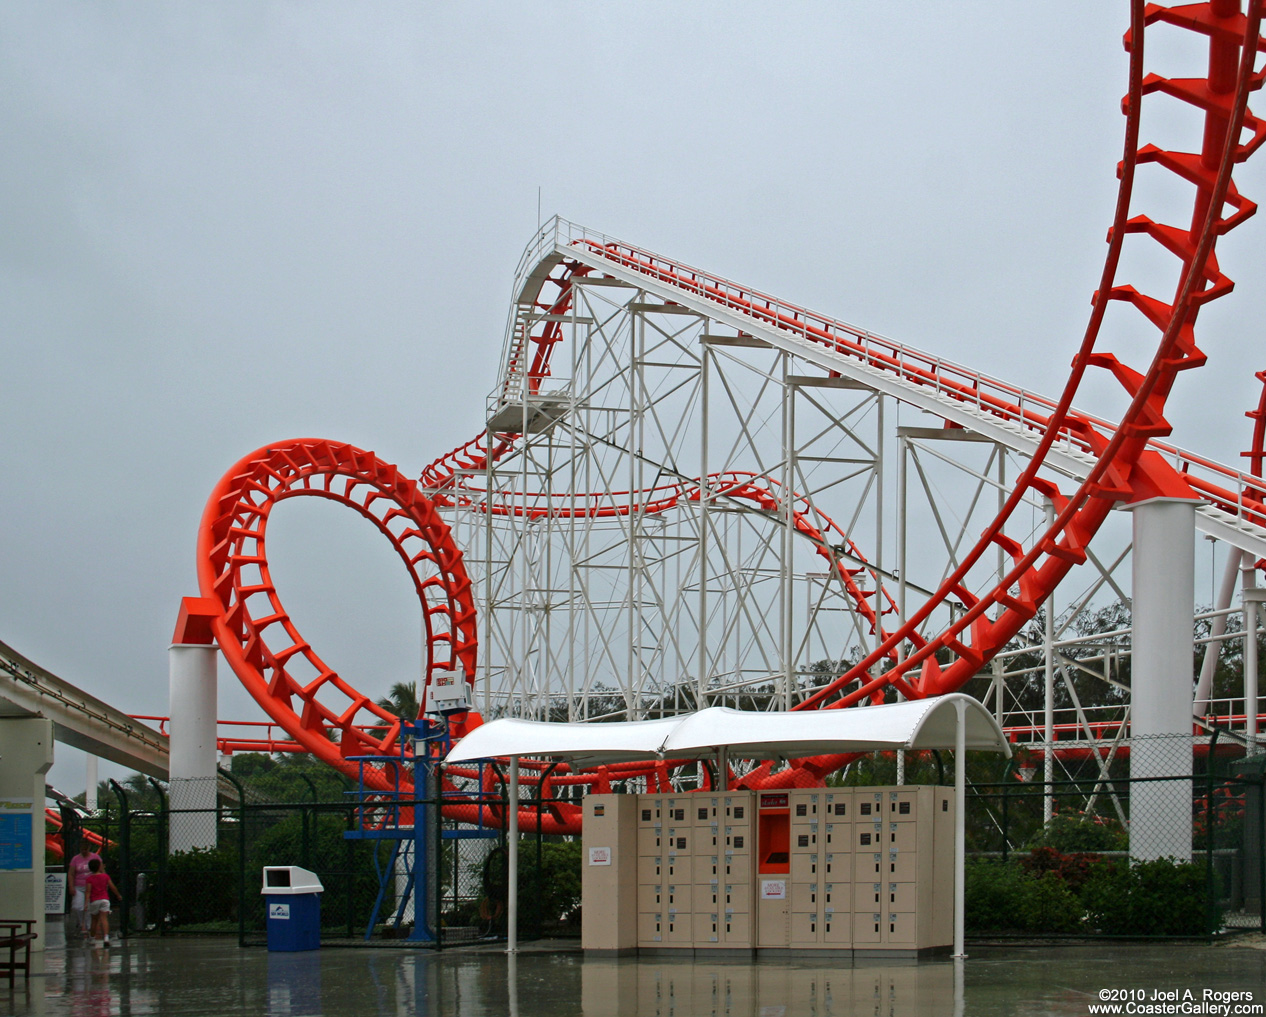 Sea Viper roller coaster in the monsoon rains in Australia